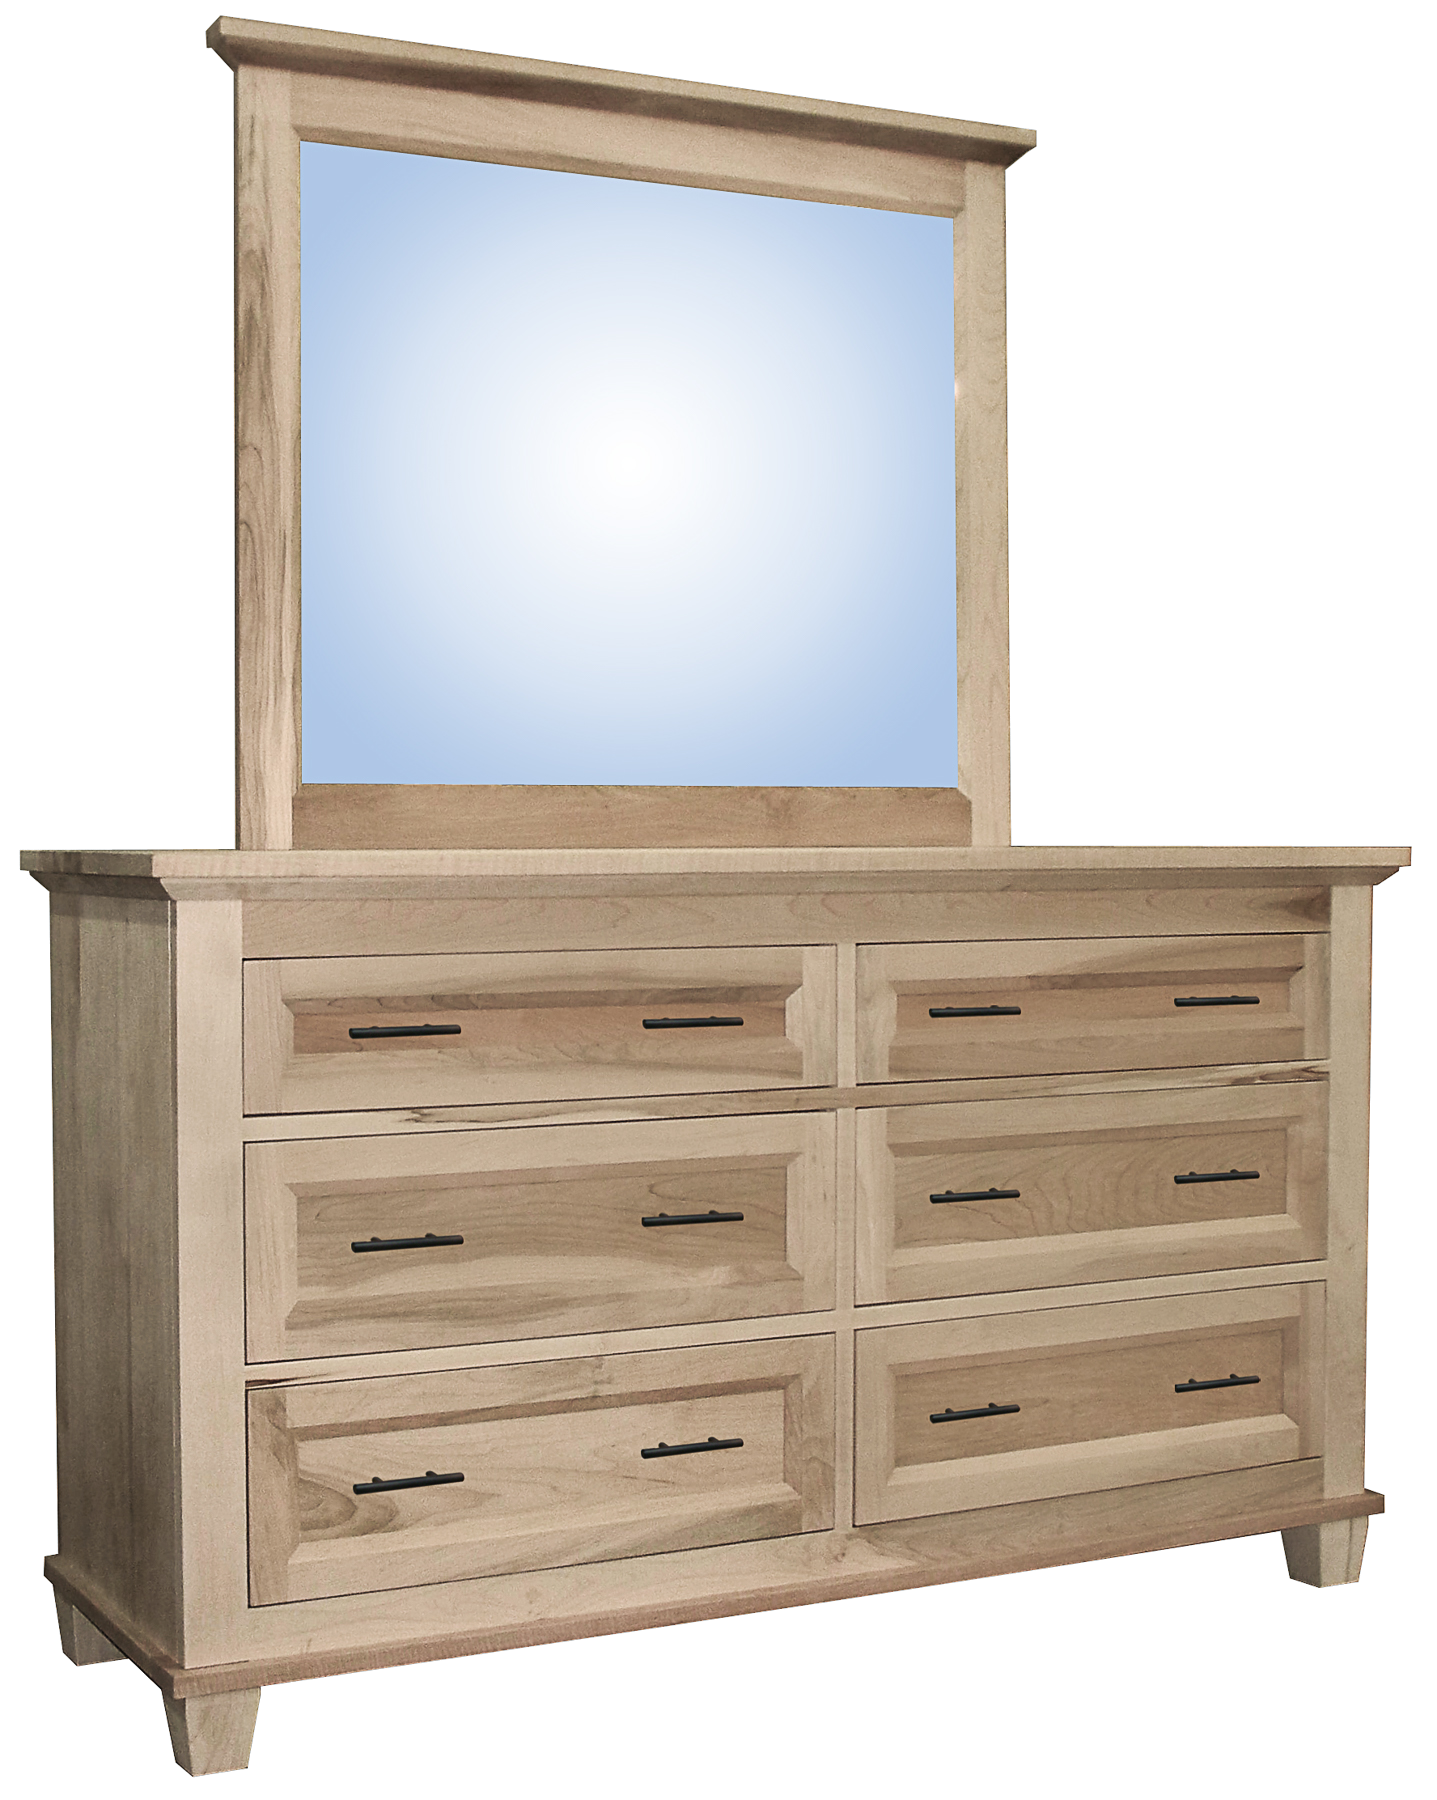 Algonquin 6 Drawer Dresser in Unfinished Brown Maple